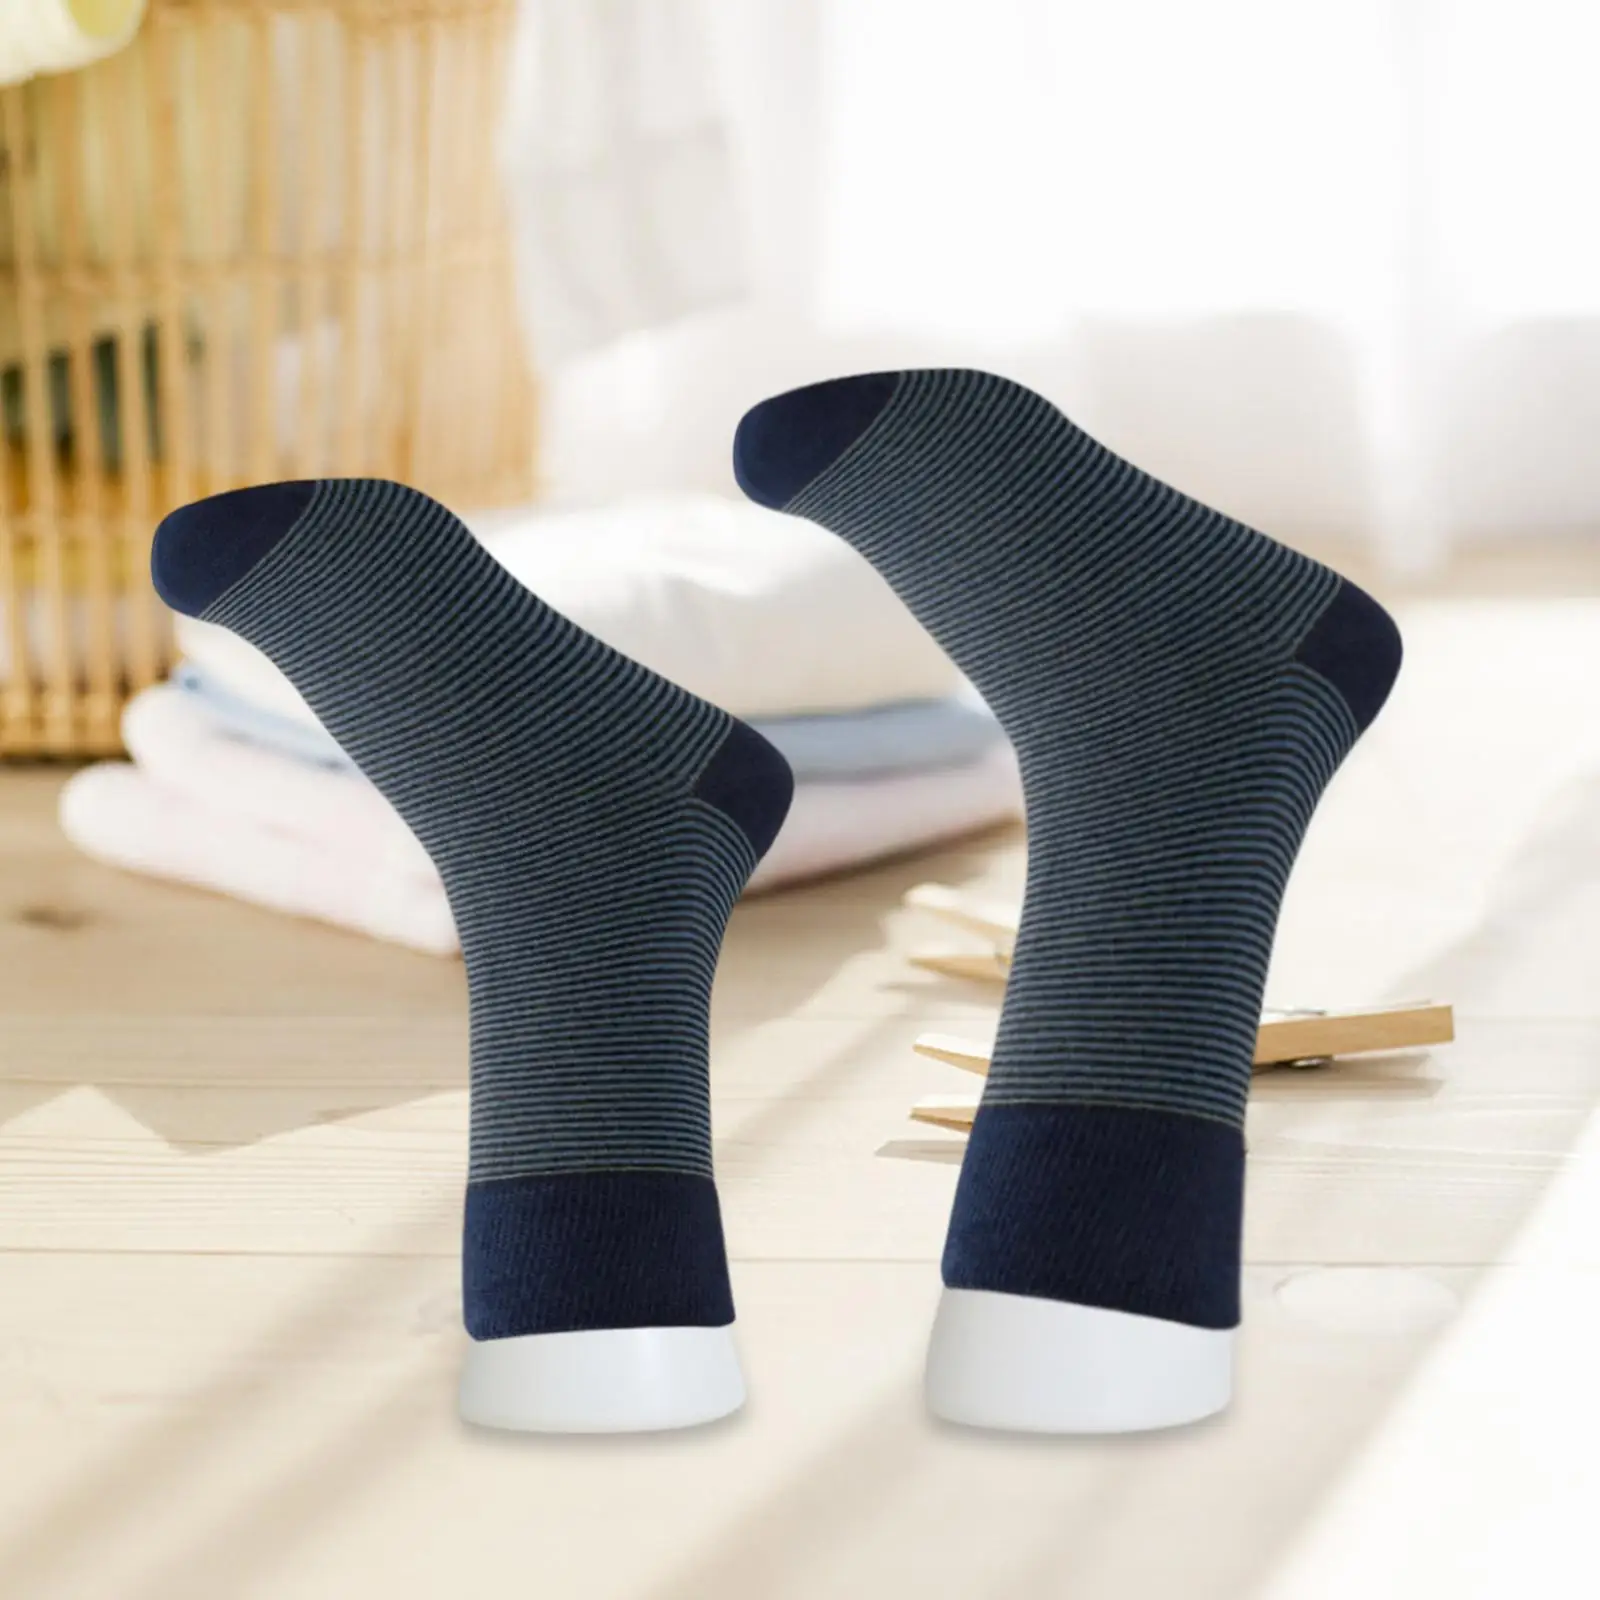 Foot Sock Display Model Shoe Support Foot Model Lifelike Mannequin Foot for